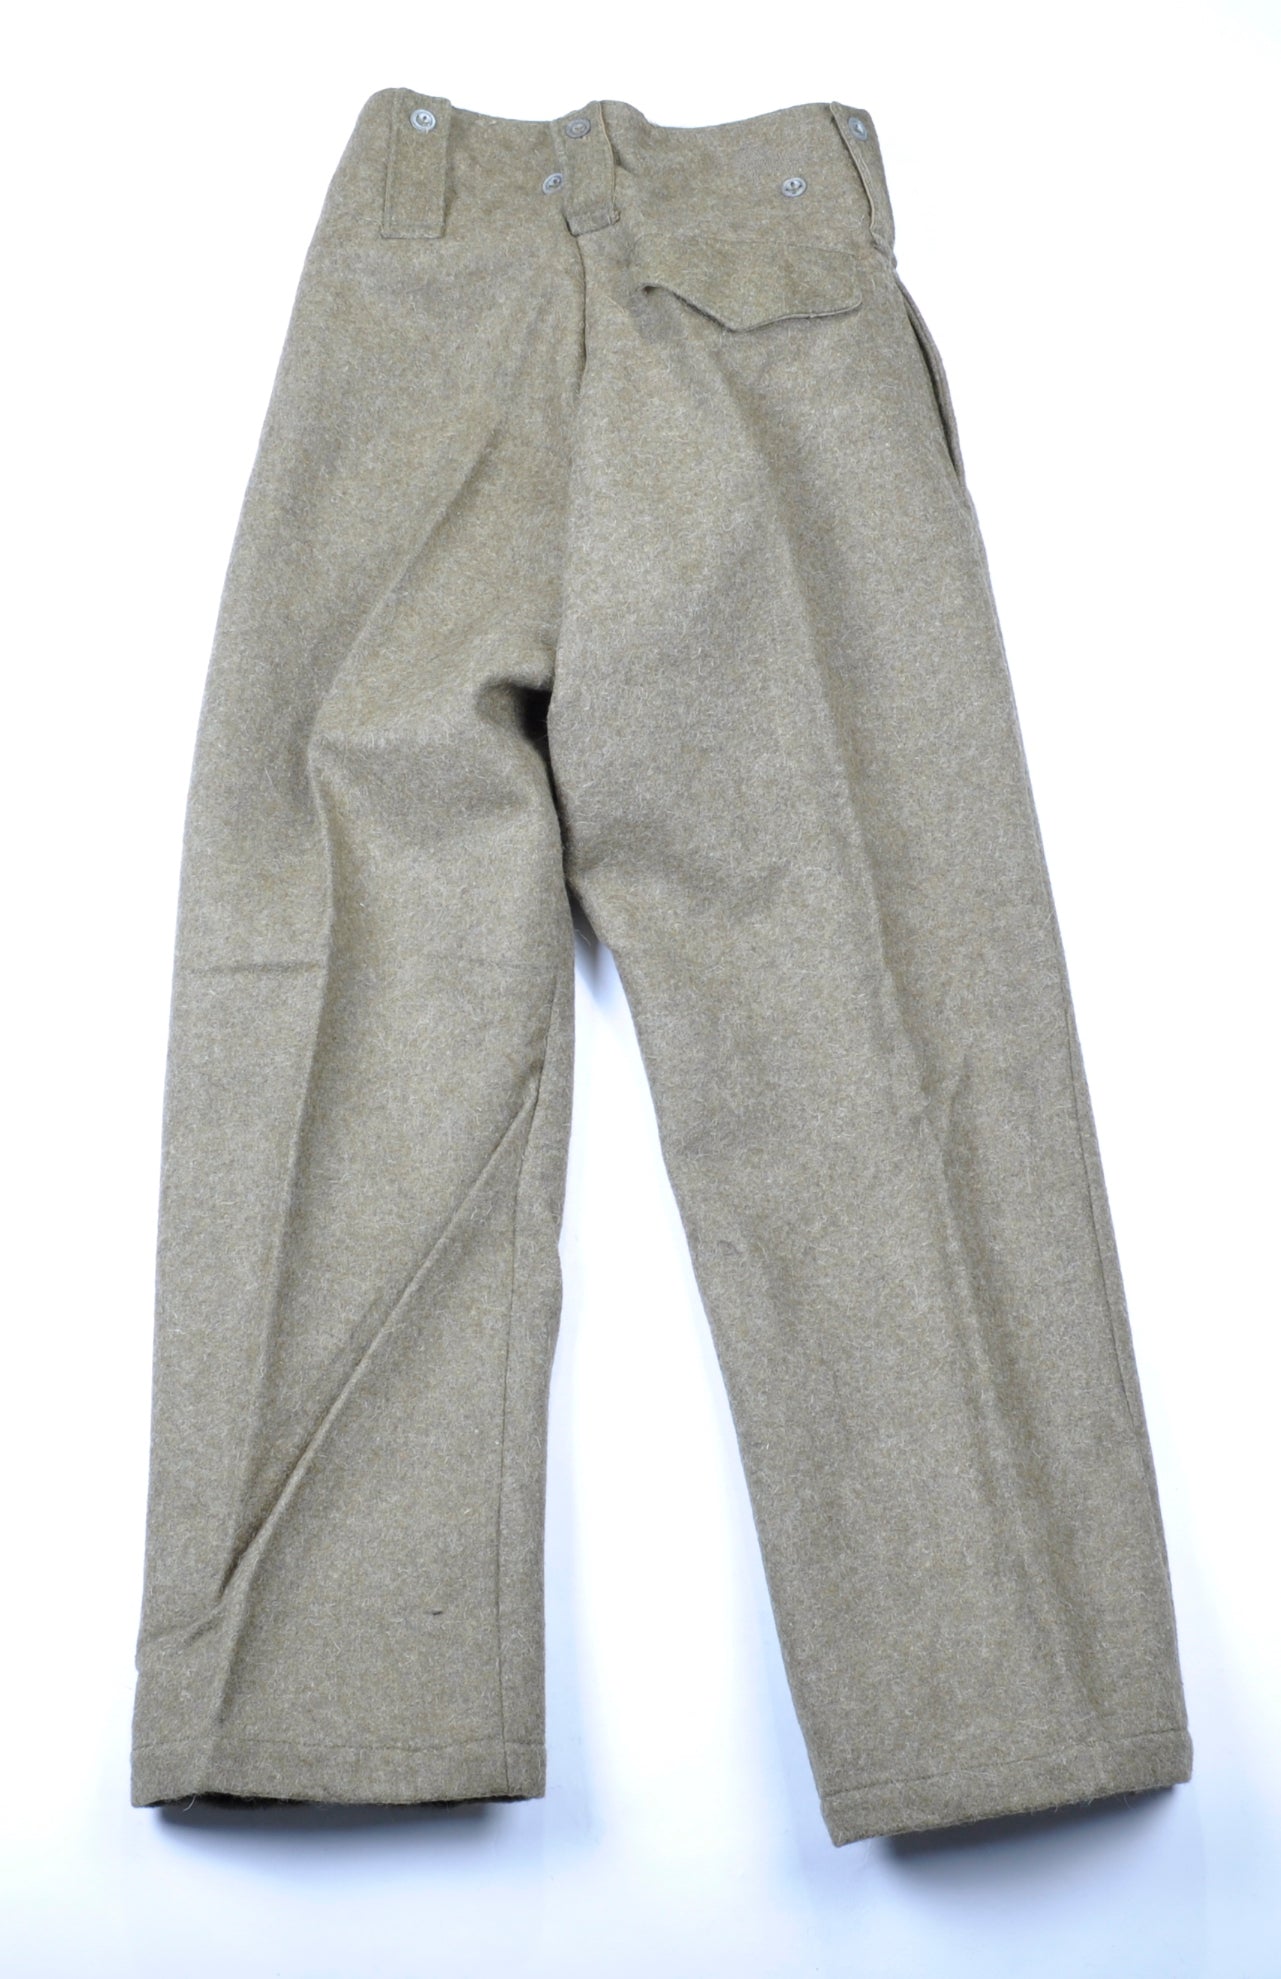 Pantalon anglais daté 1943